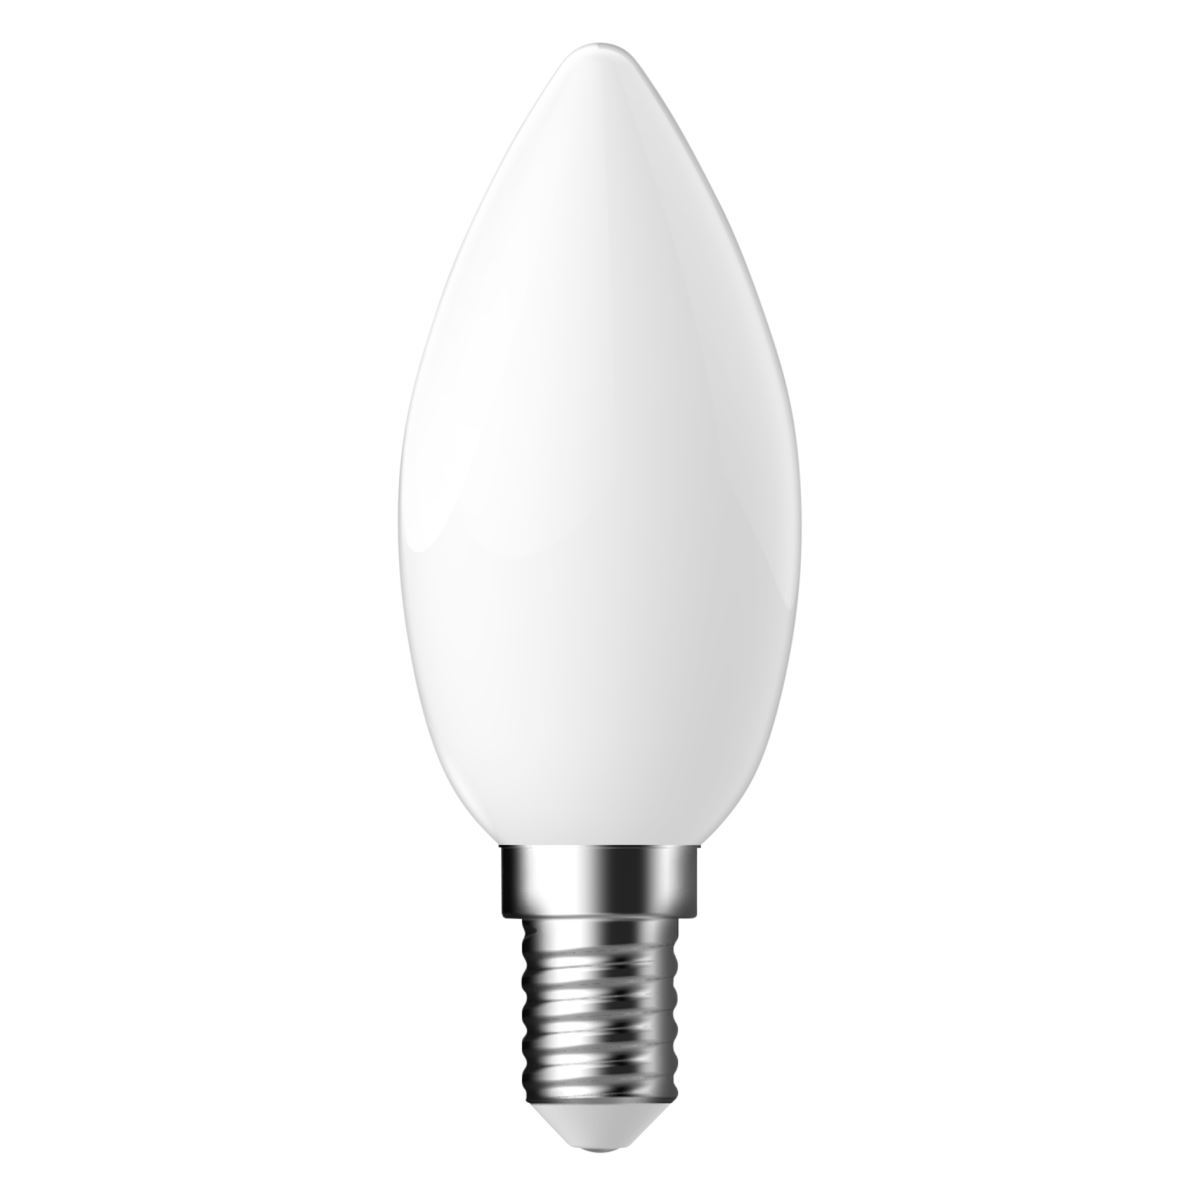 Nordlux Energetic LED Leuchtmittel E14 C35 Filament weiß 470lm 2700K 4,6W 80Ra 360° 3,5x3,5x9,7cm von Energetic